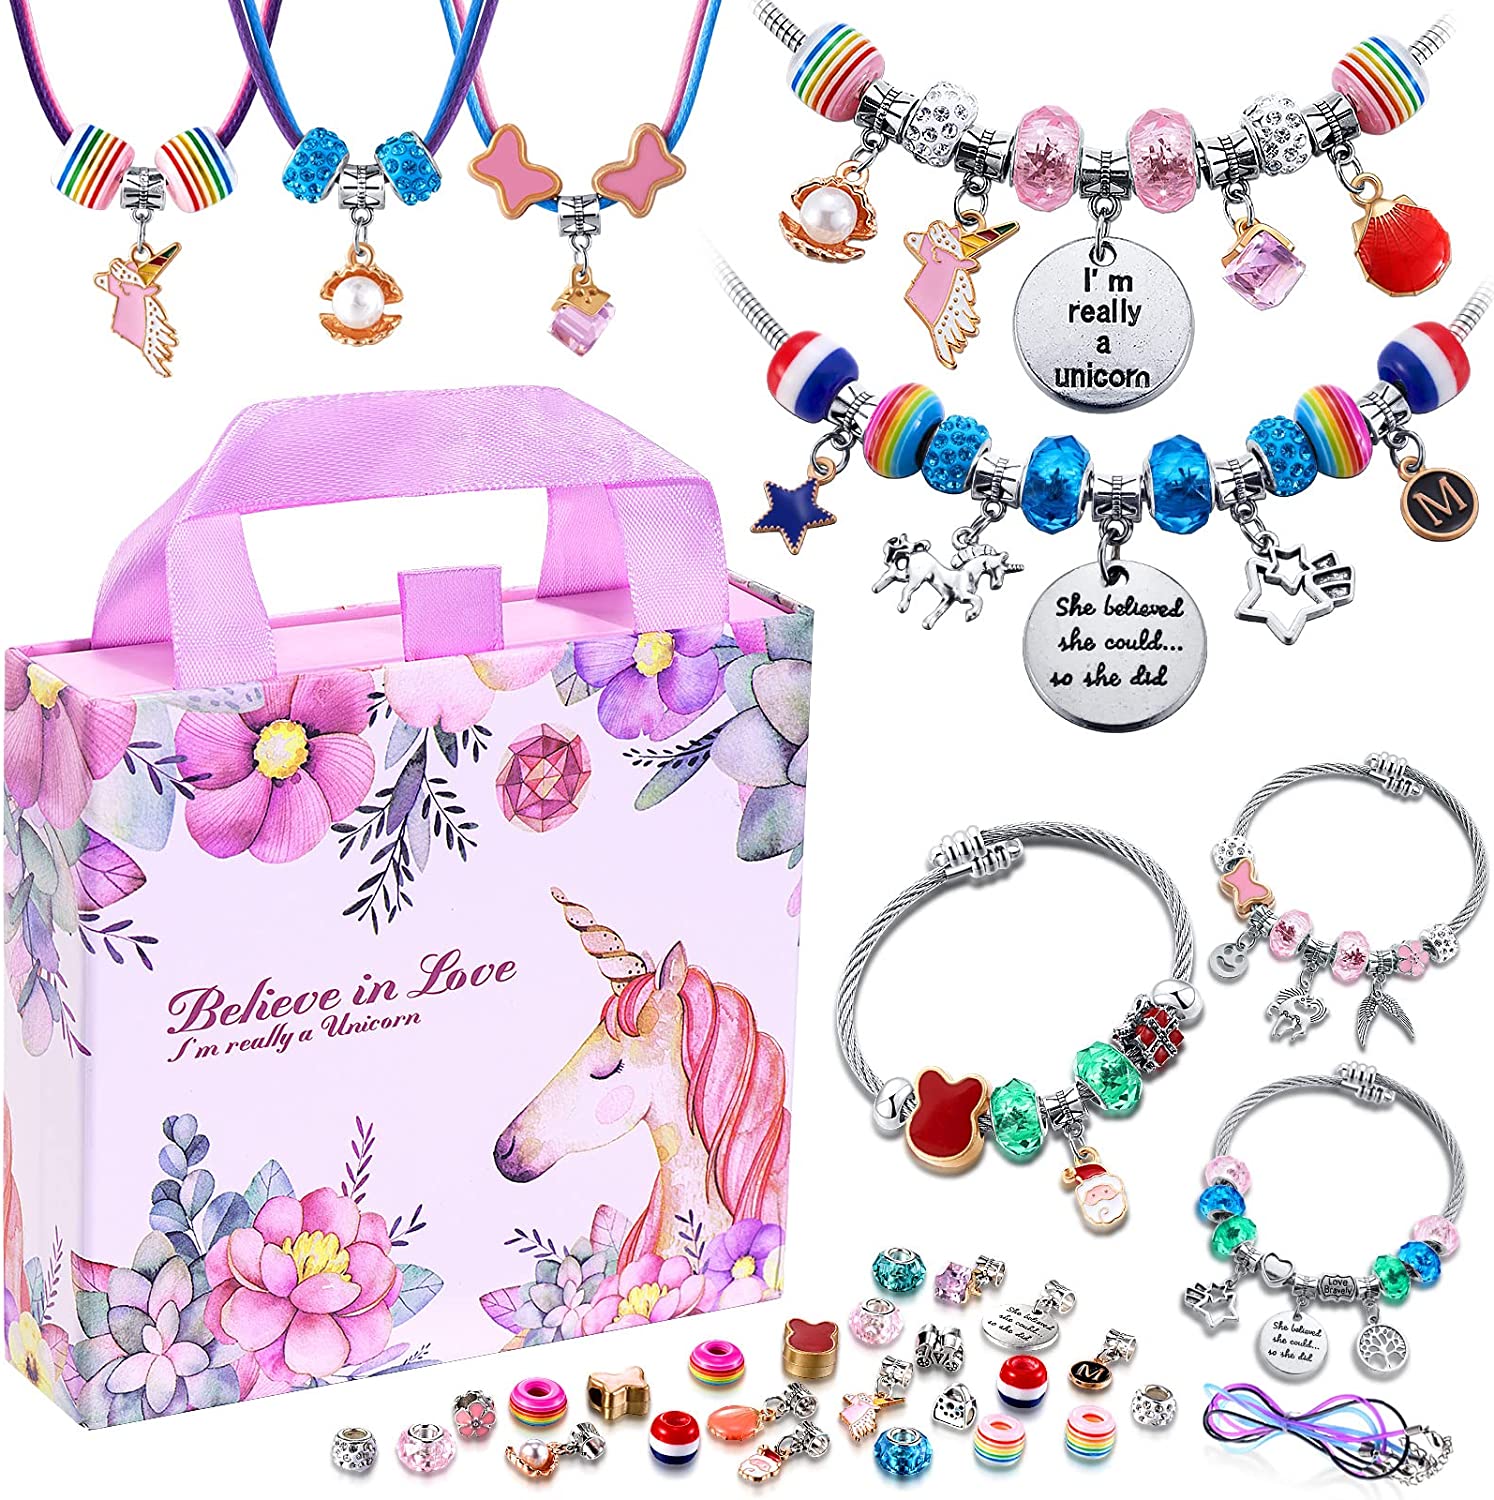 klmars Bracelet Making Craft Kit for Girls,Jewelry Making Supplies Beads Charms